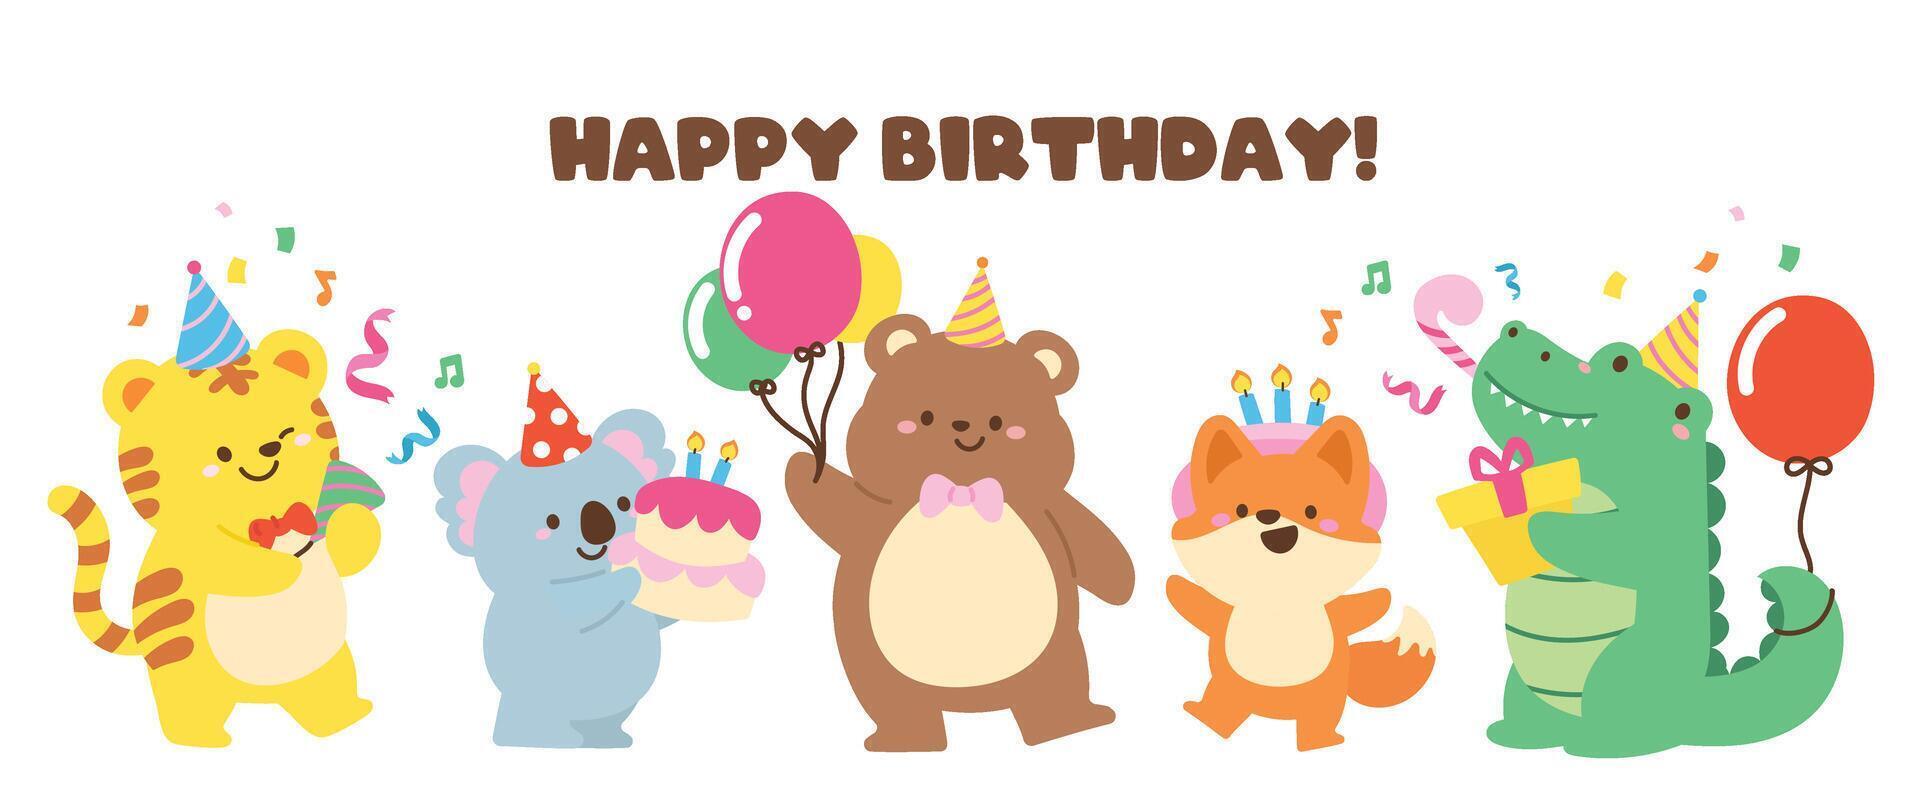 Happy birthday concept animal vector set. Collection of adorable wildlife, tiger, koala bear, fox, crocodile. Birthday party funny animal character illustration for greeting card, kids, education.